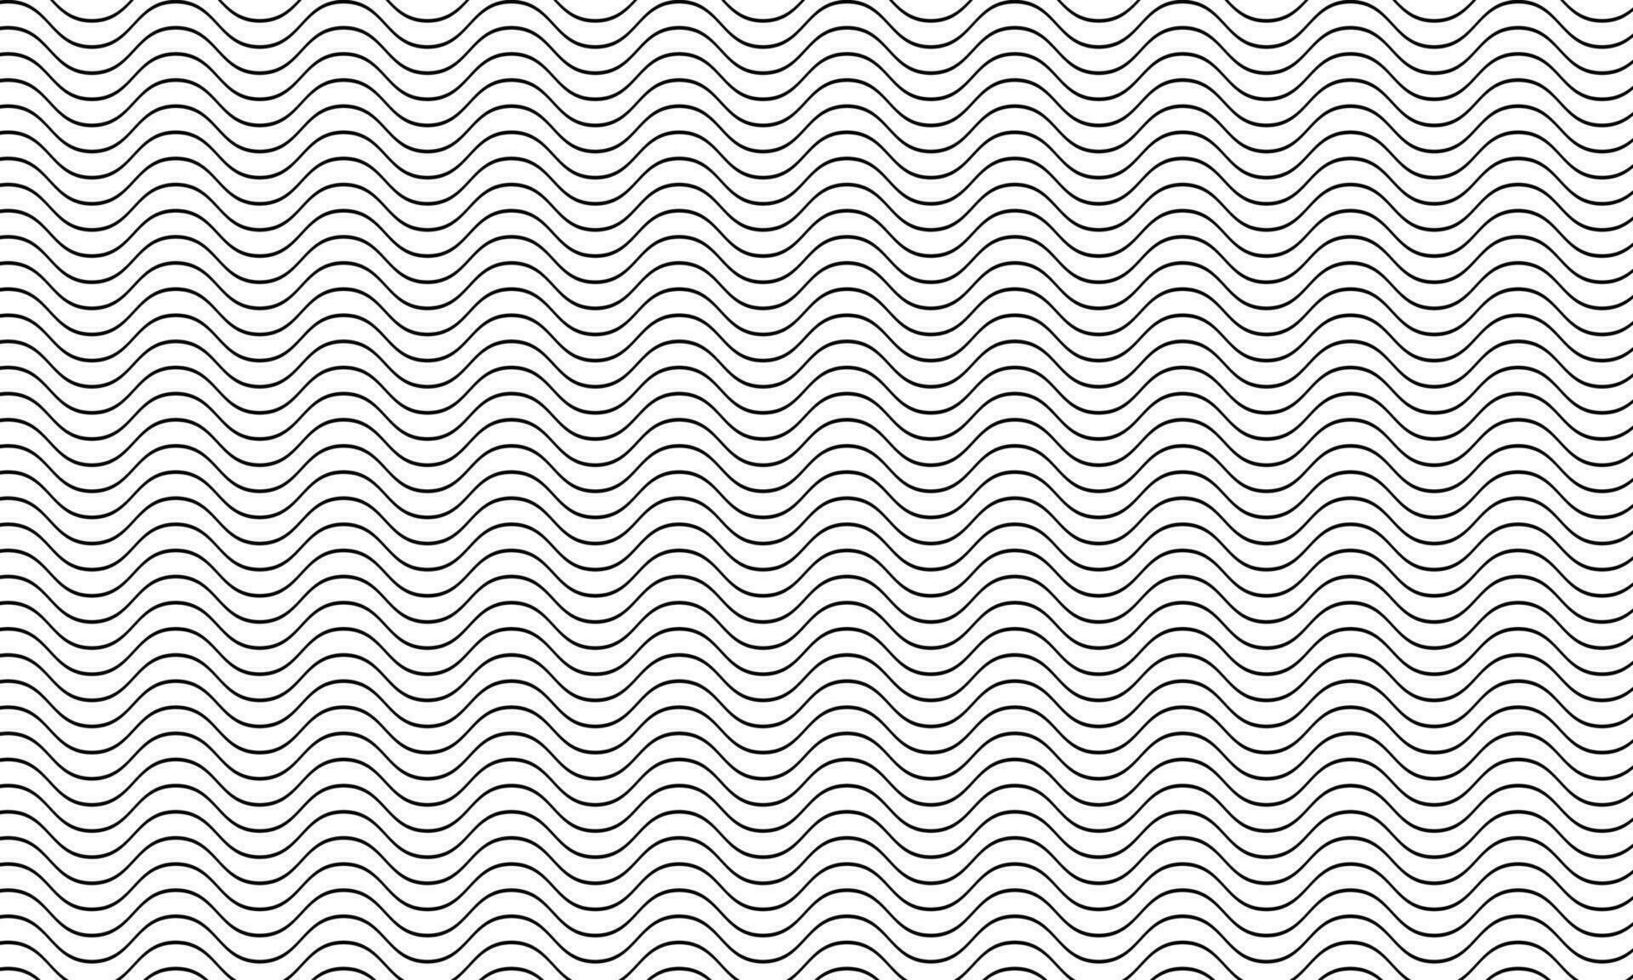 abstrakt kreativ sömlös horisontell Vinka linje mönster vektor. vektor